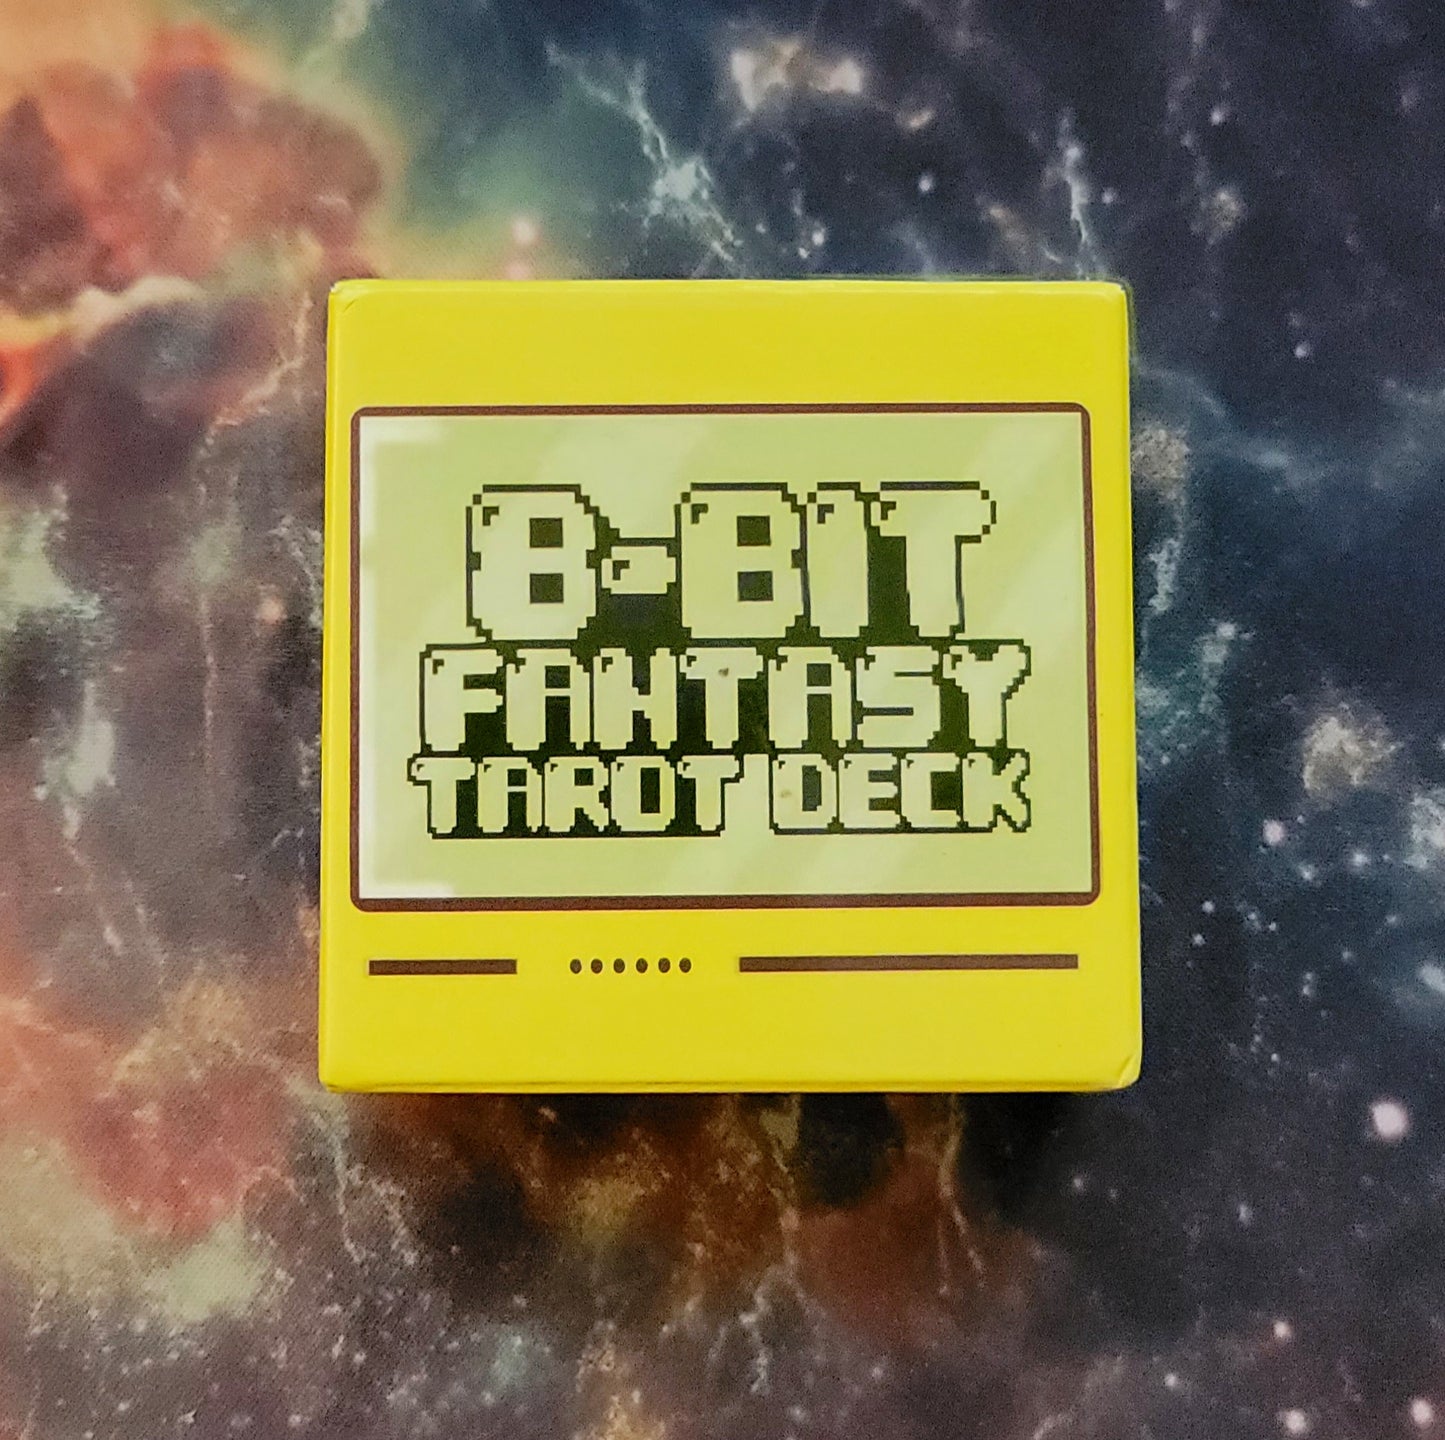 8-bit Fantasy Tarot Deck